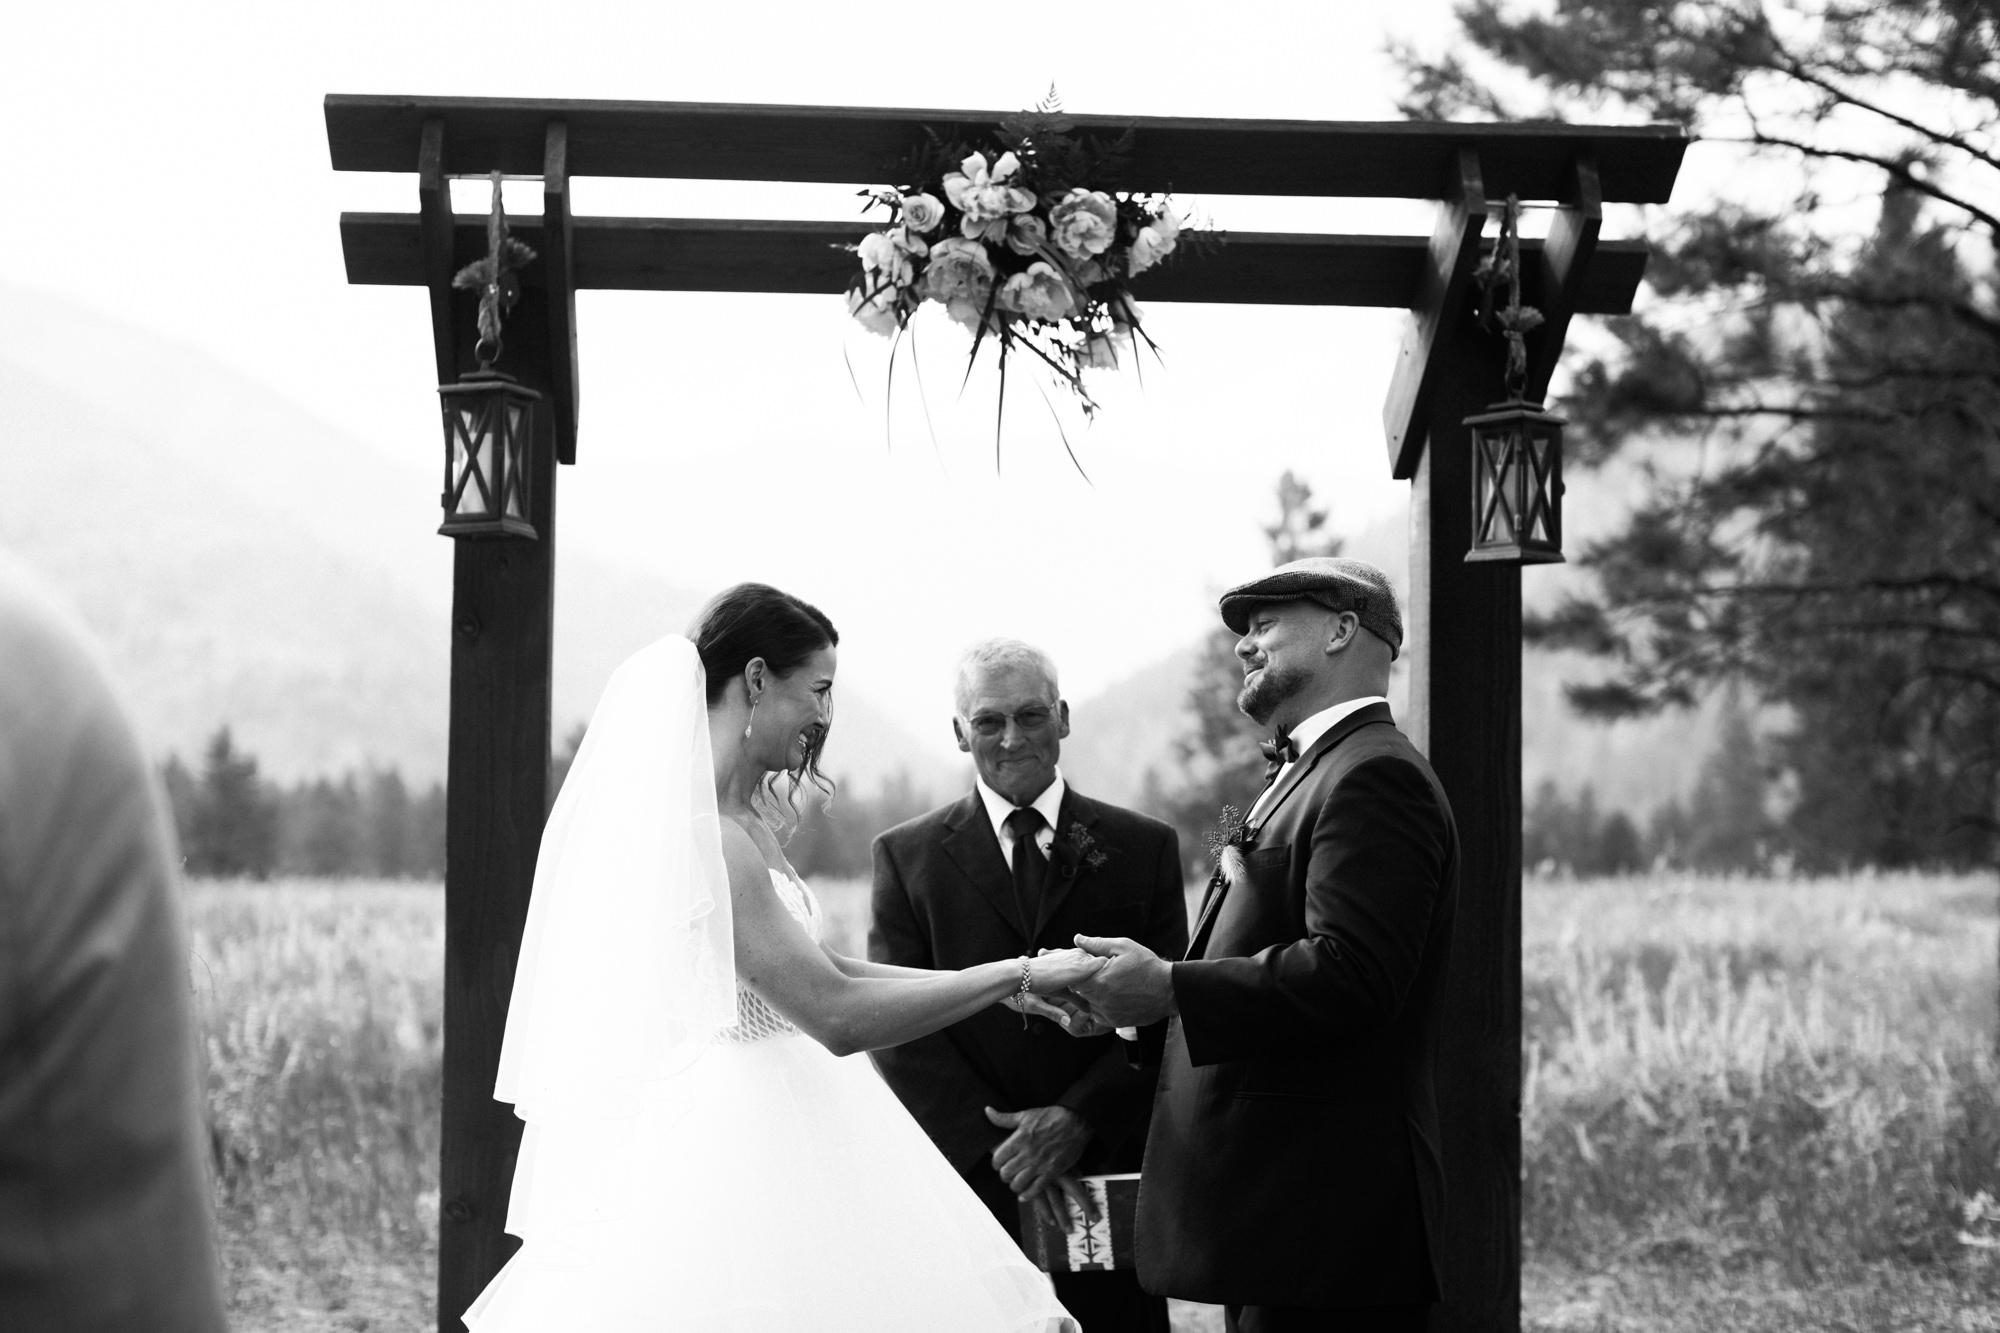 april + aran's adventurous wedding on the clark fork river | white raven wedding + event center | montana wedding photographer